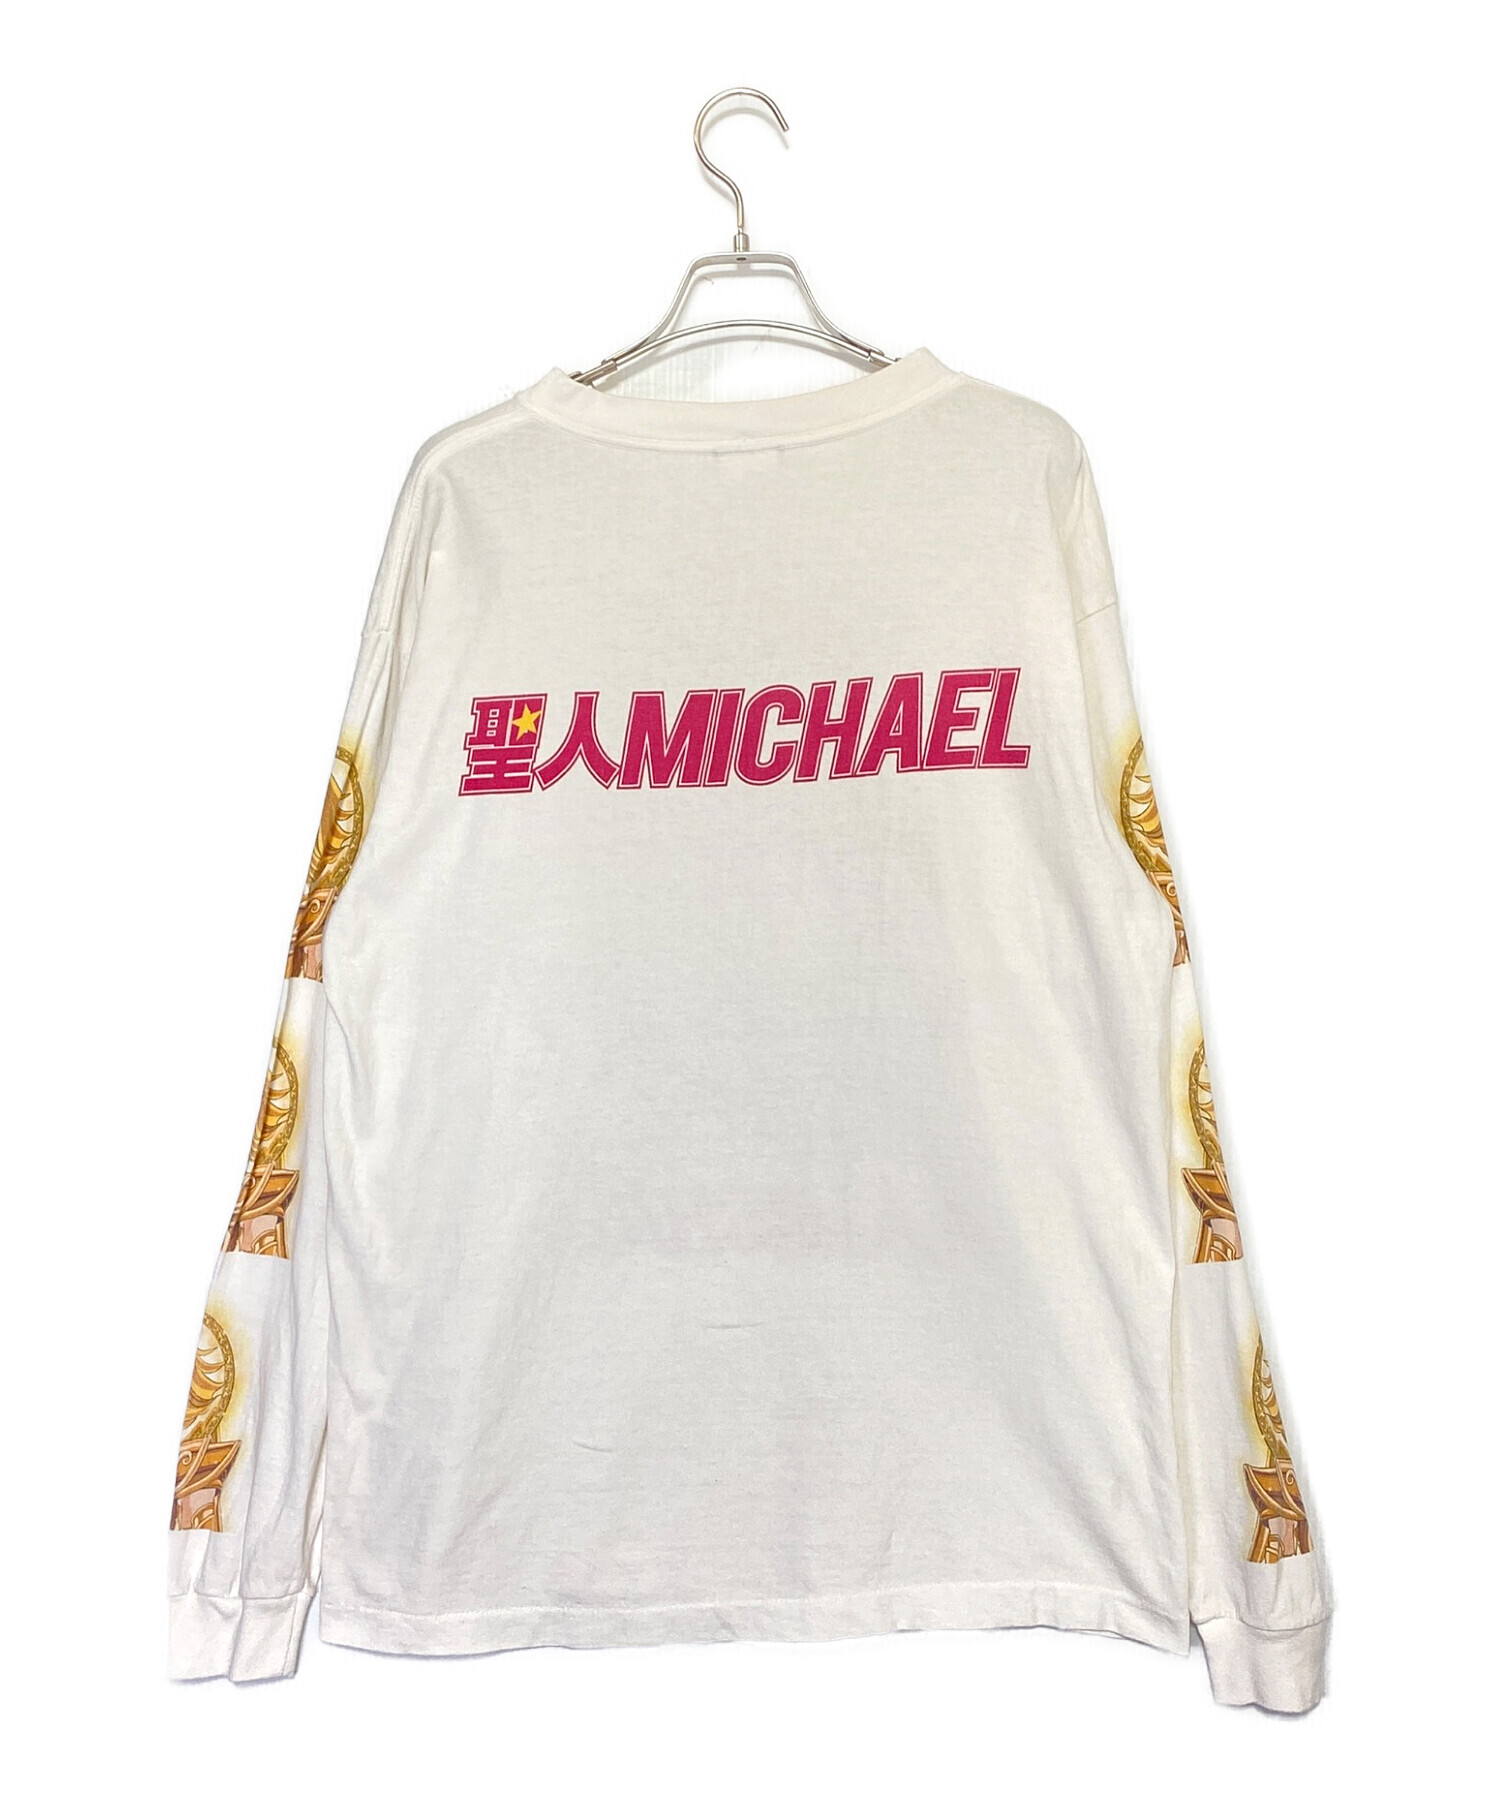 SAINT MICHAEL (セントマイケル) 聖人マイケル ロングスリーブTシャツ ホワイト サイズ:M